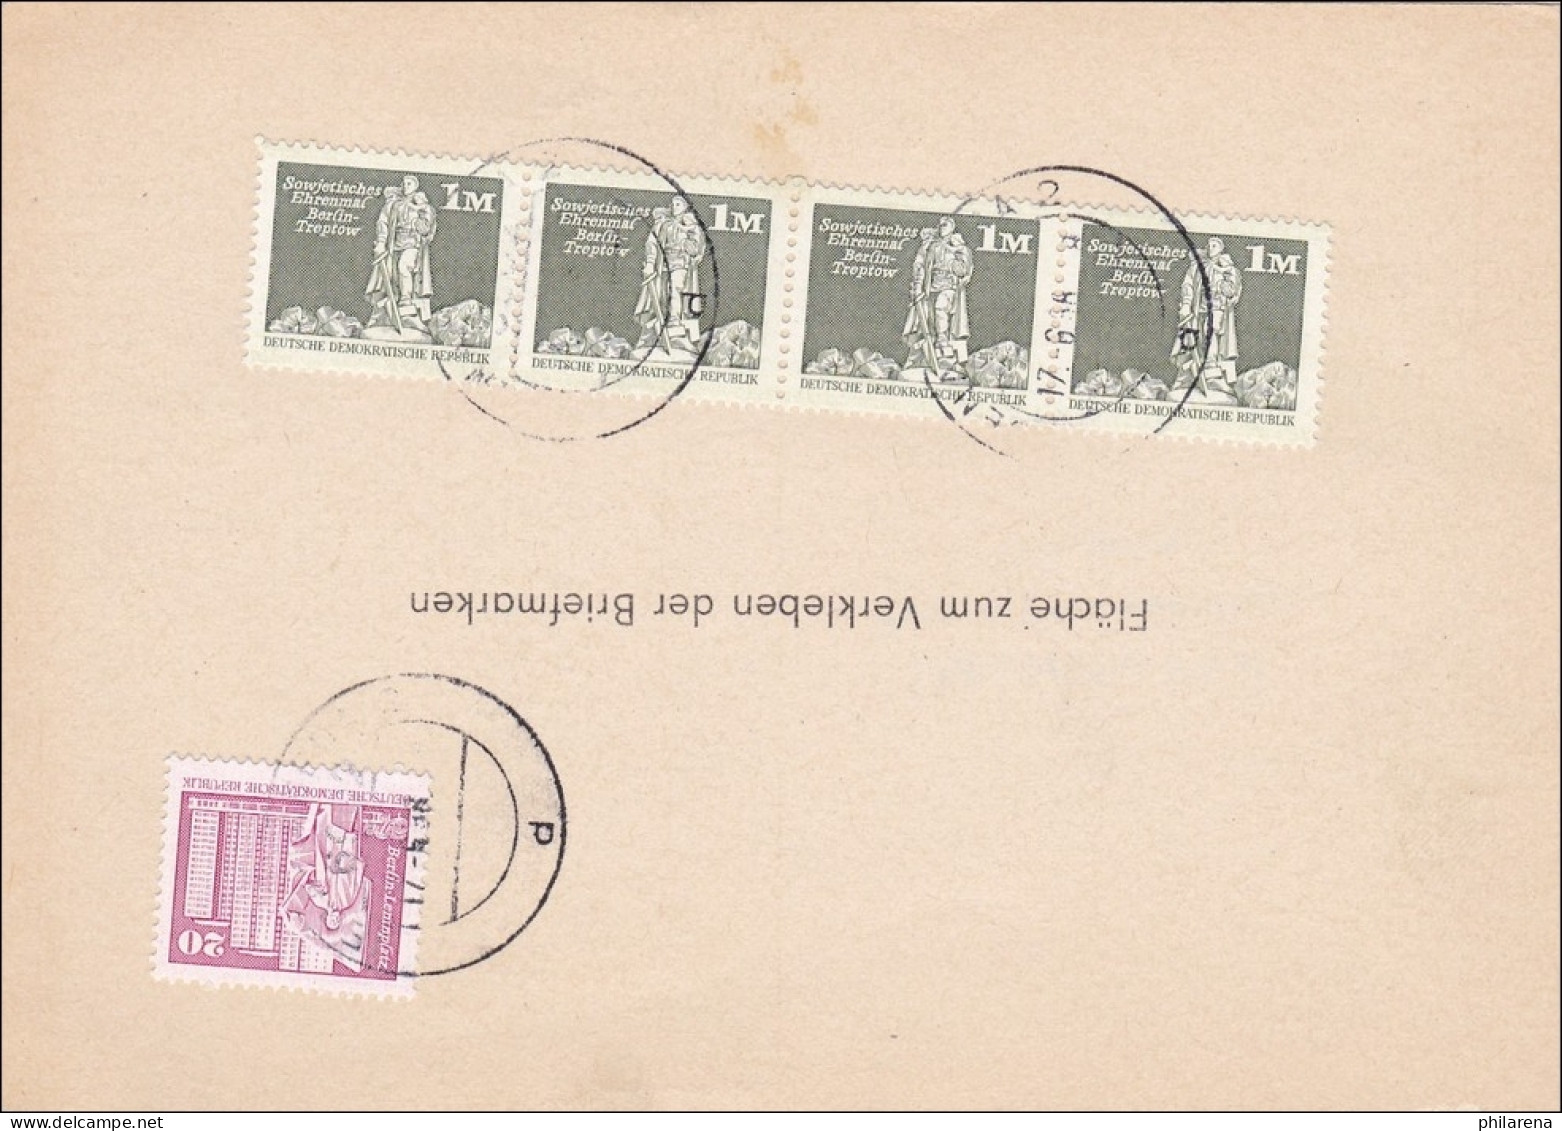 DDR:  Antwortpostkarte Als Postsache Jena - Covers & Documents